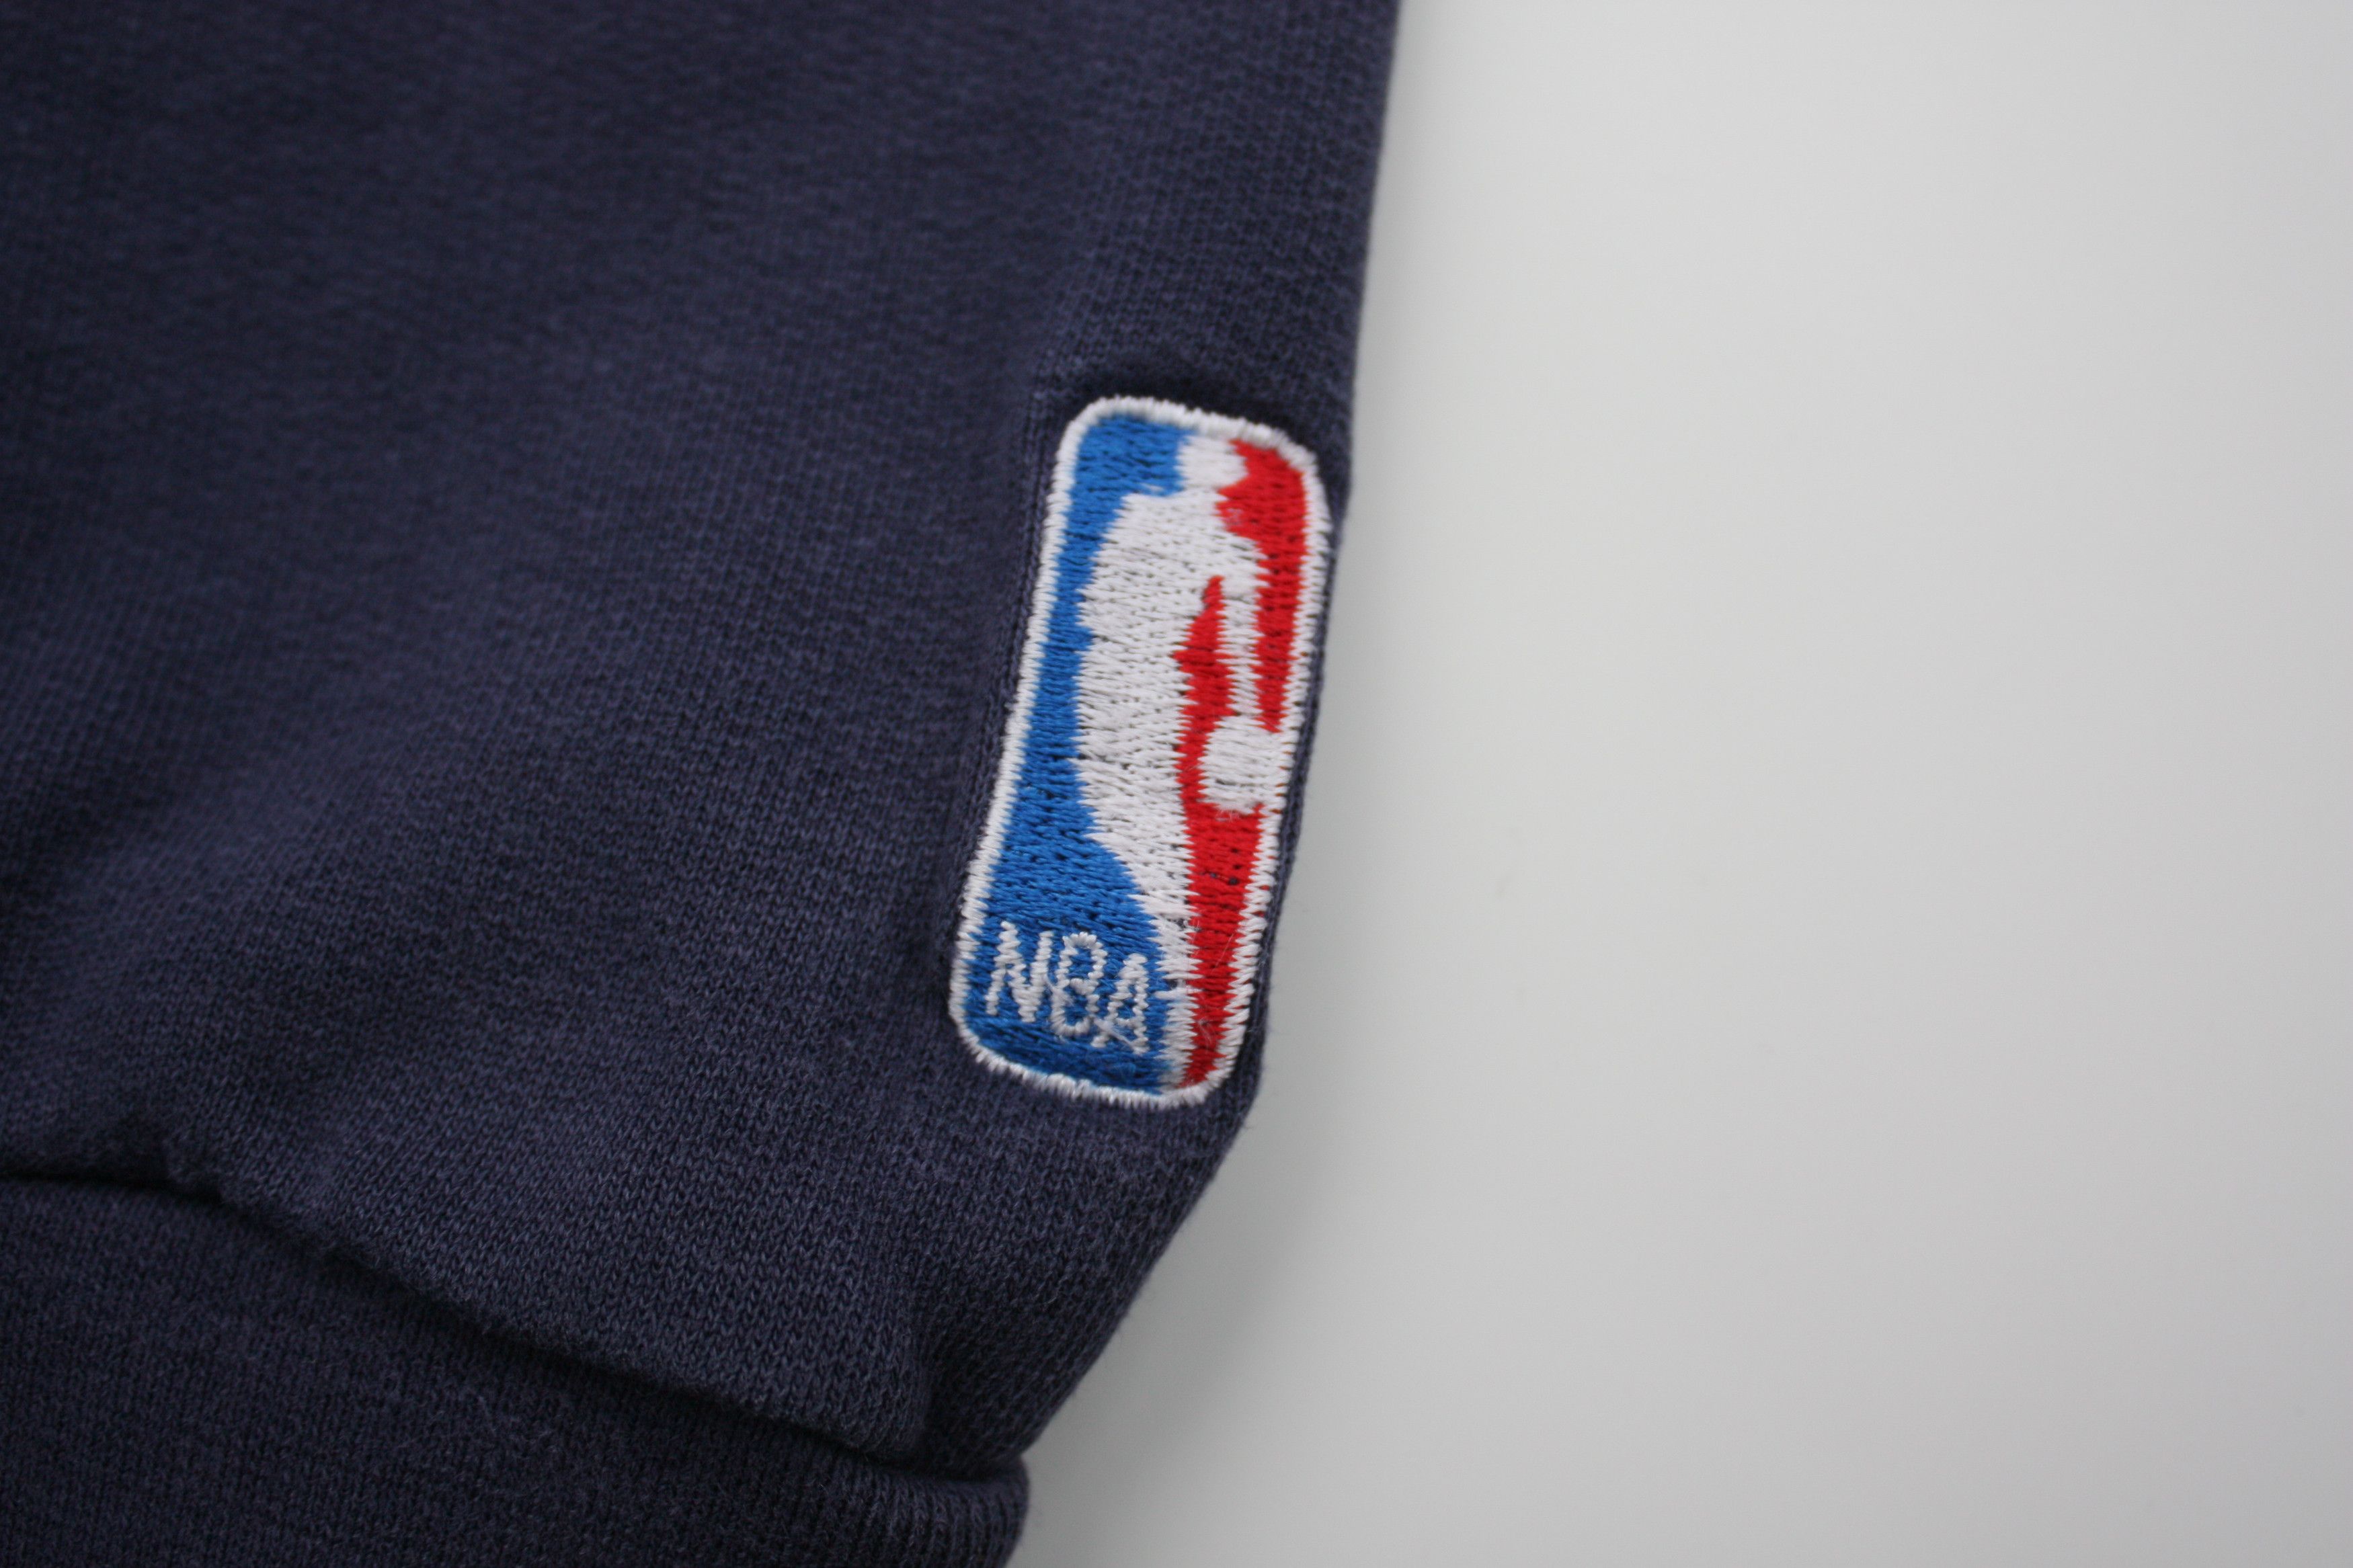 Vintage NBA Vintage Ultra Rare Navy Blue Sweatshirt Crewneck Size US XL / EU 56 / 4 - 4 Preview